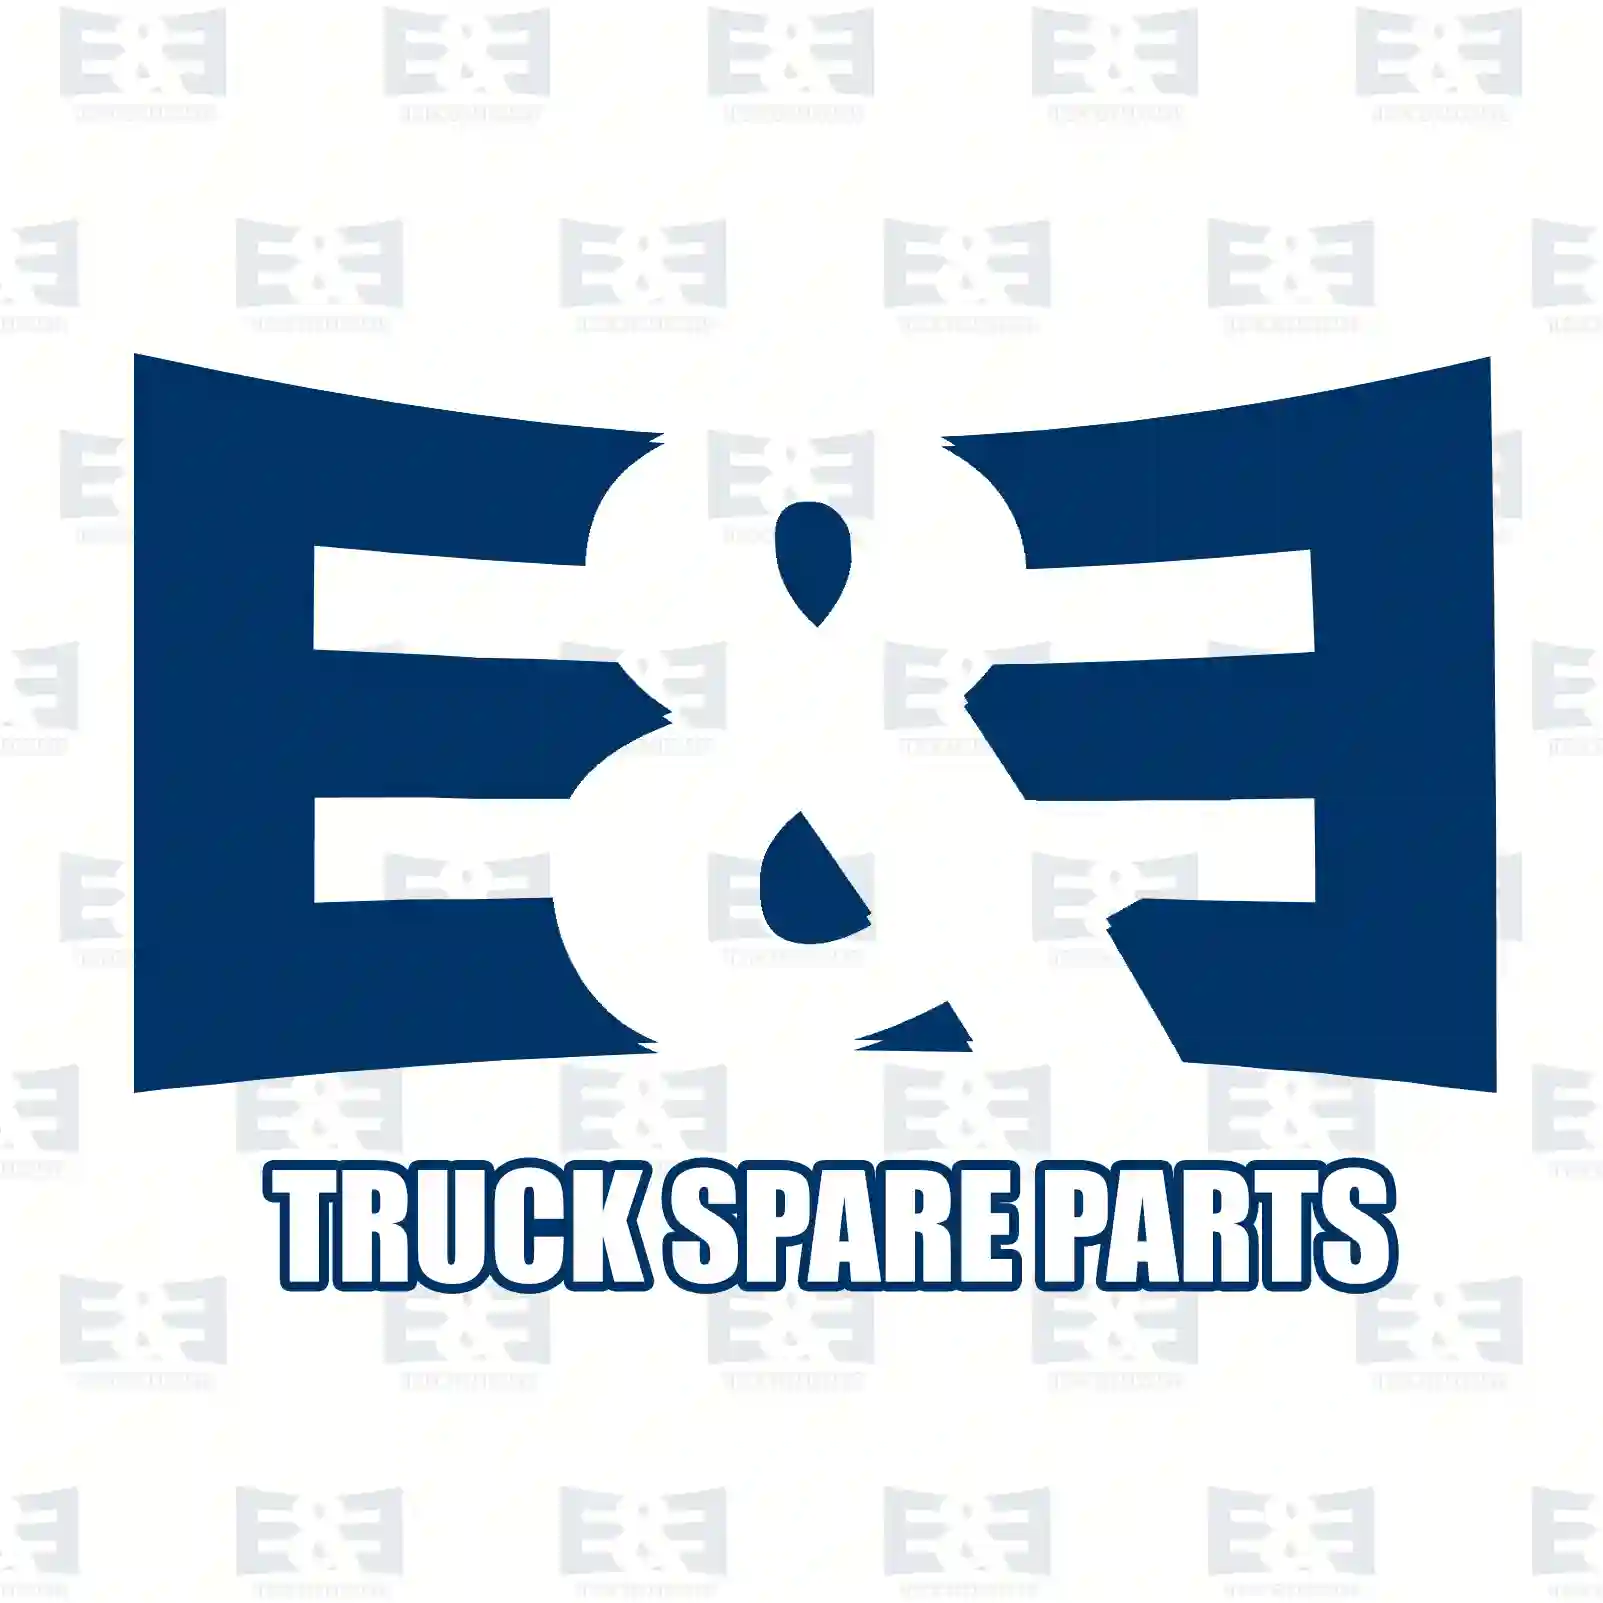 Drum brake lining kit, axle kit - oversize, 2E2294800, 1535253, 1535253S, 551128, 551143, 551166, 552115 ||  2E2294800 E&E Truck Spare Parts | Truck Spare Parts, Auotomotive Spare Parts Drum brake lining kit, axle kit - oversize, 2E2294800, 1535253, 1535253S, 551128, 551143, 551166, 552115 ||  2E2294800 E&E Truck Spare Parts | Truck Spare Parts, Auotomotive Spare Parts